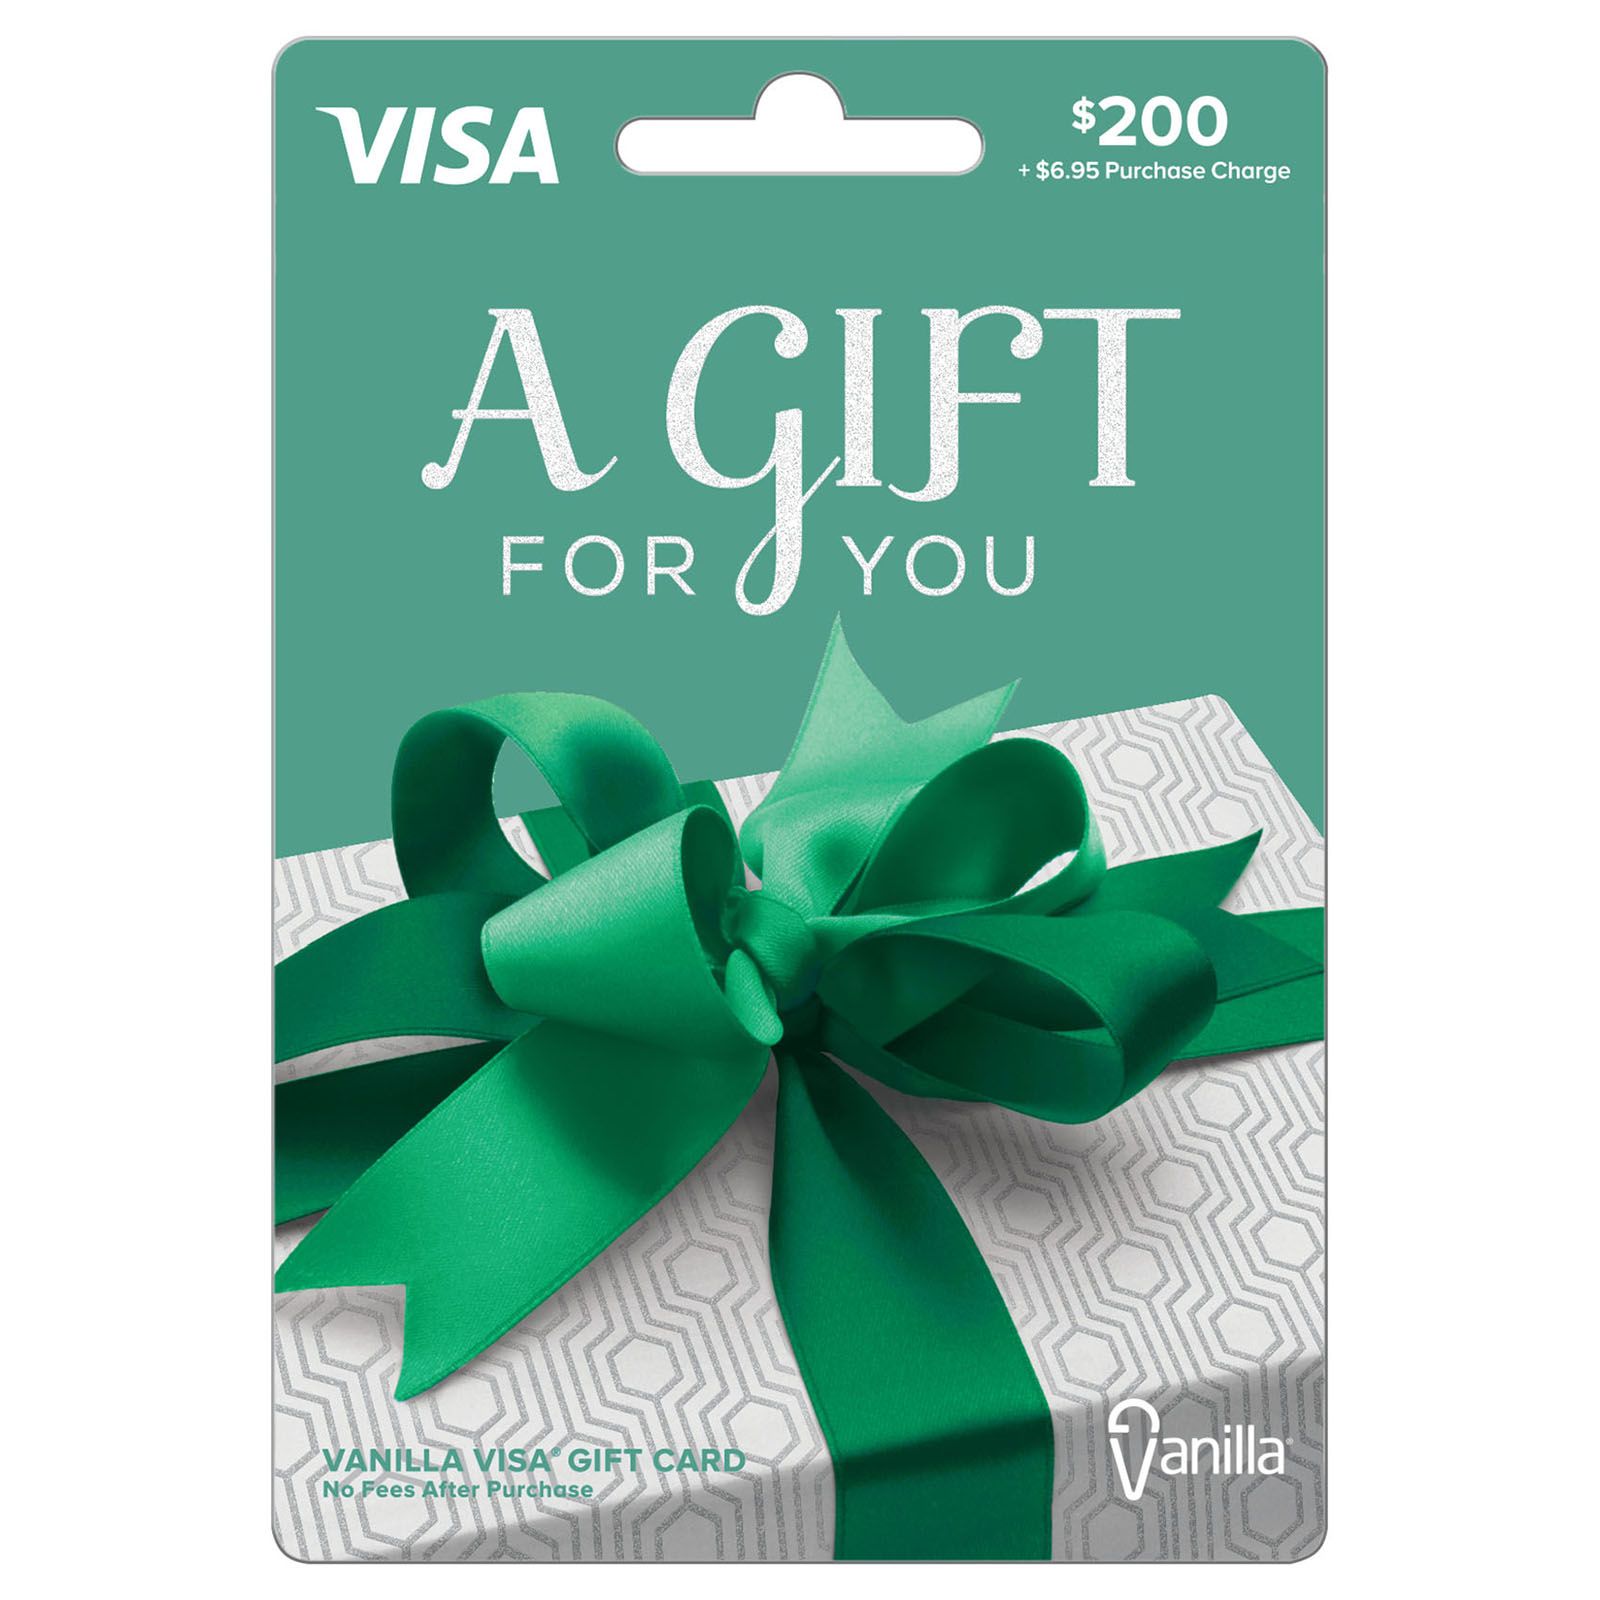 Visa $100 Gift Card (plus $5.95 Purchase Fee)